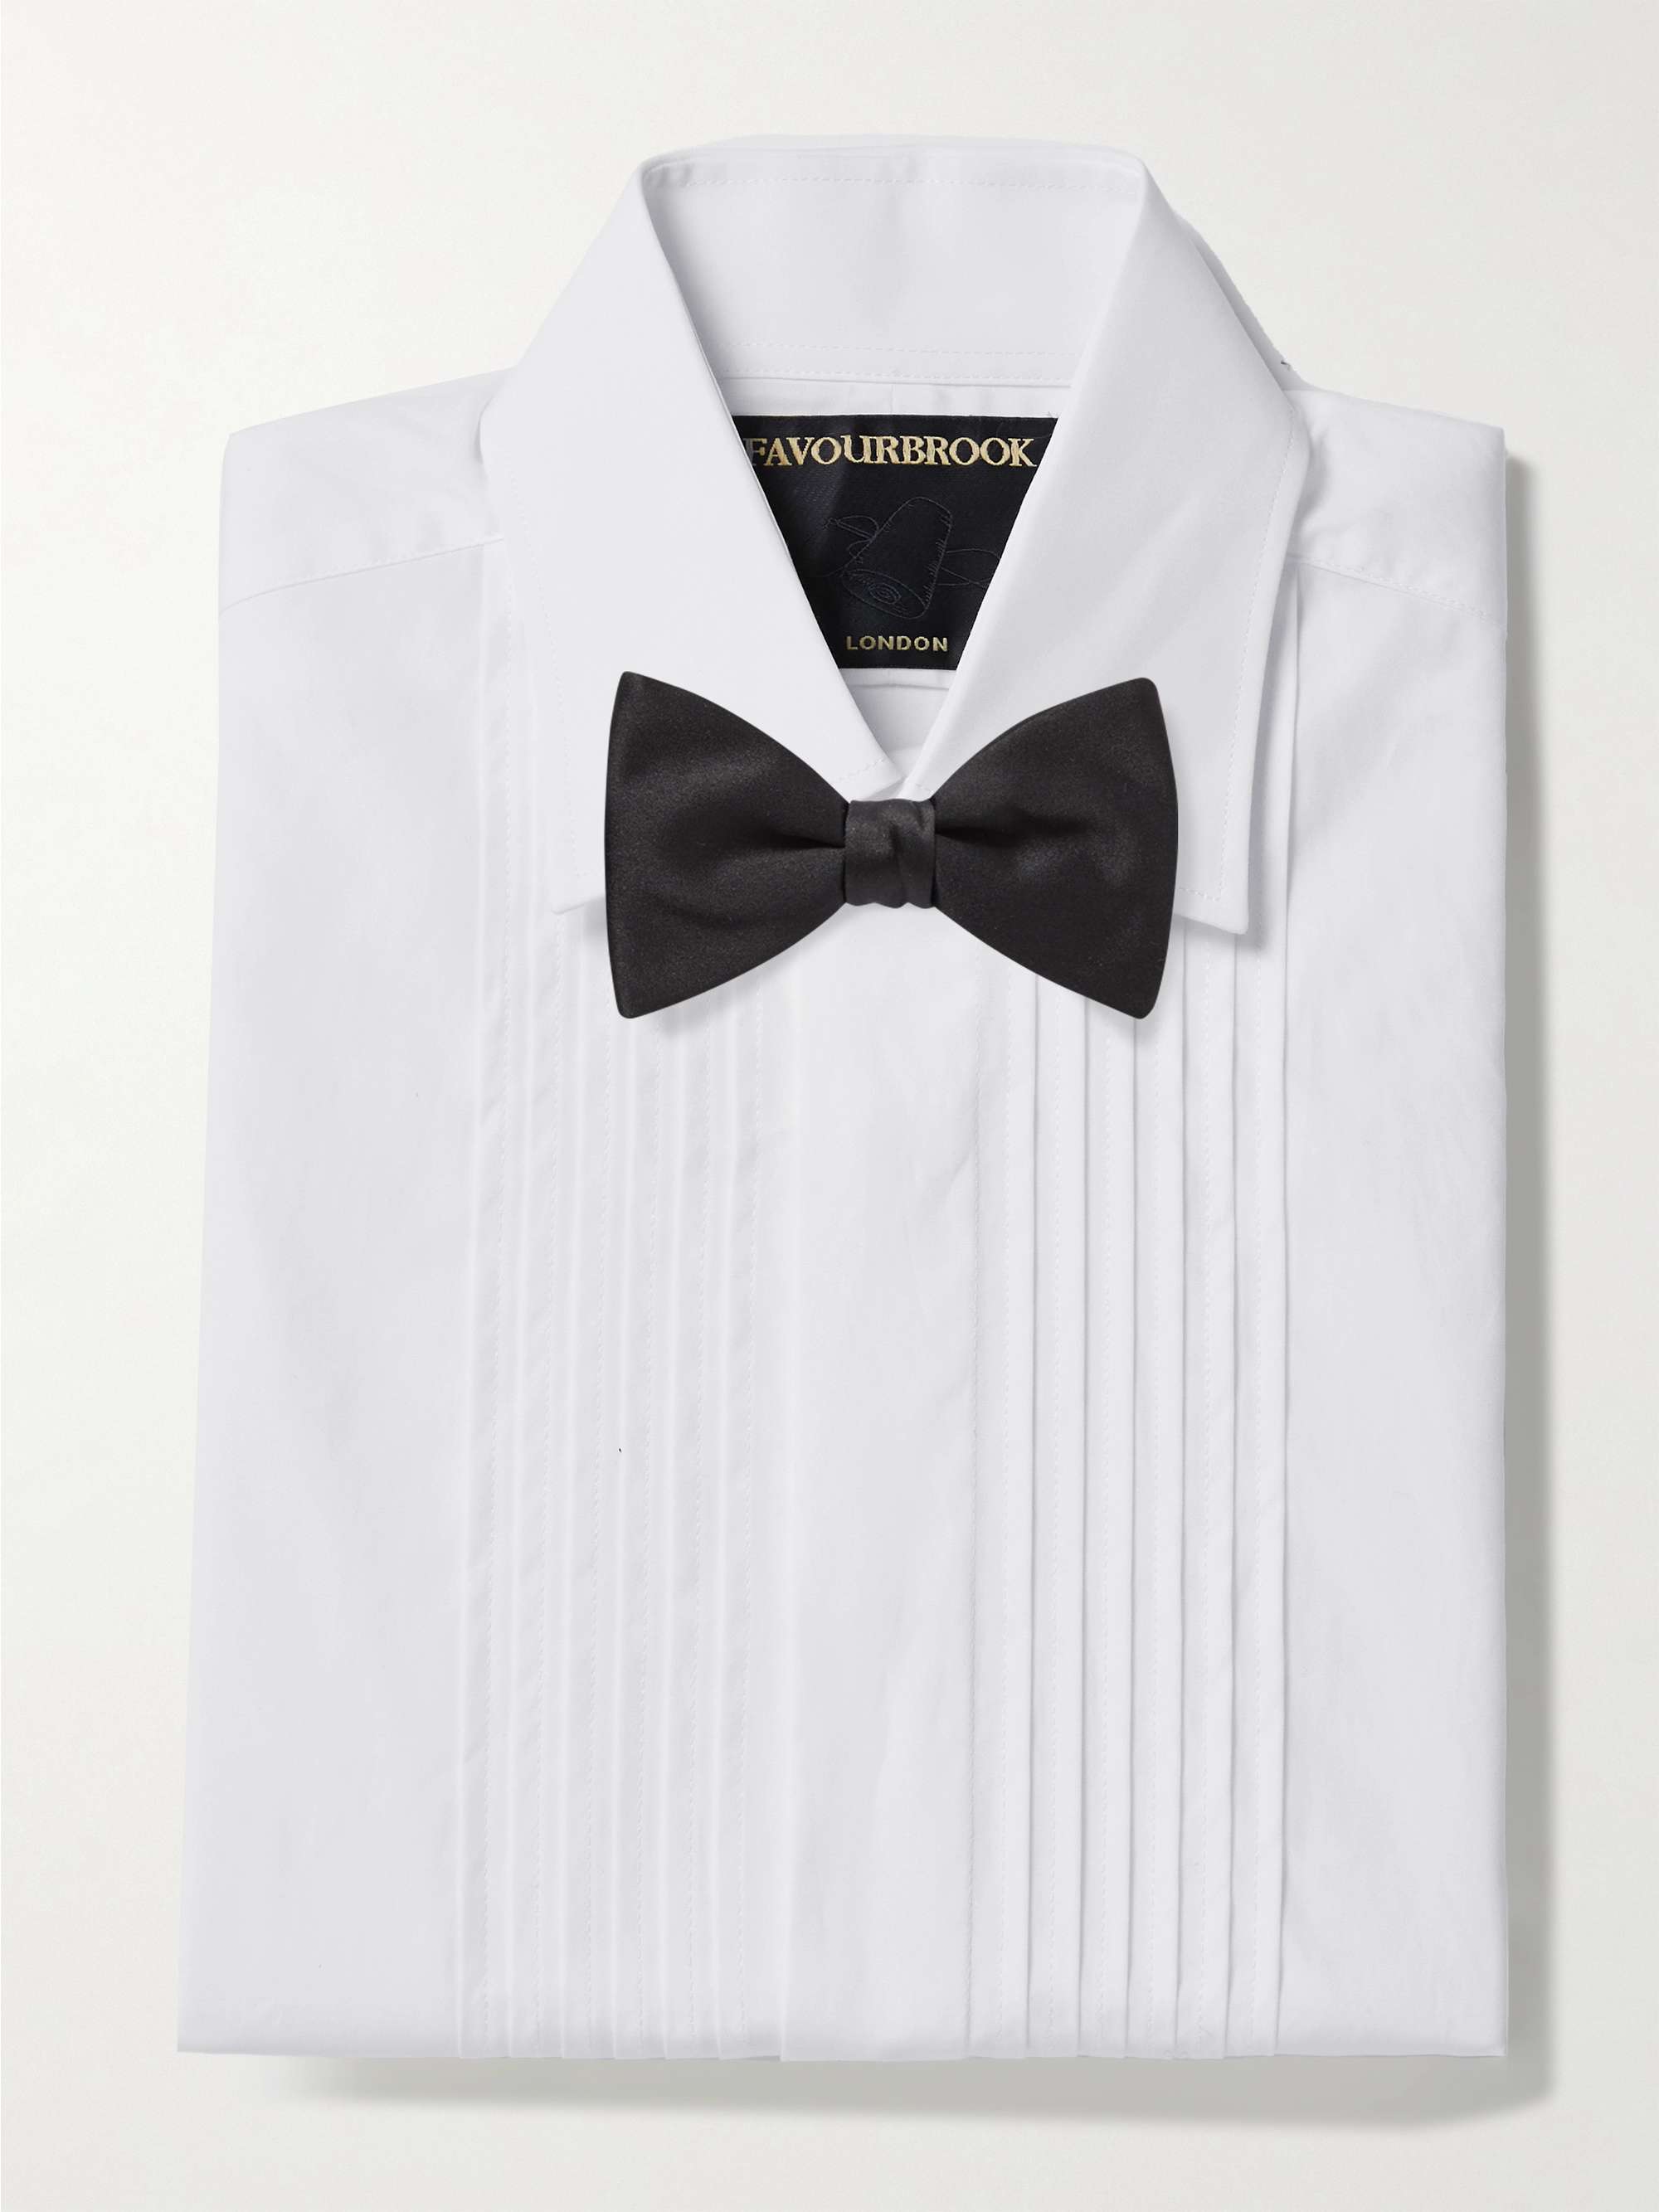 FAVOURBROOK Pleated Double-Cuff Cotton-Poplin Tuxedo Shirt